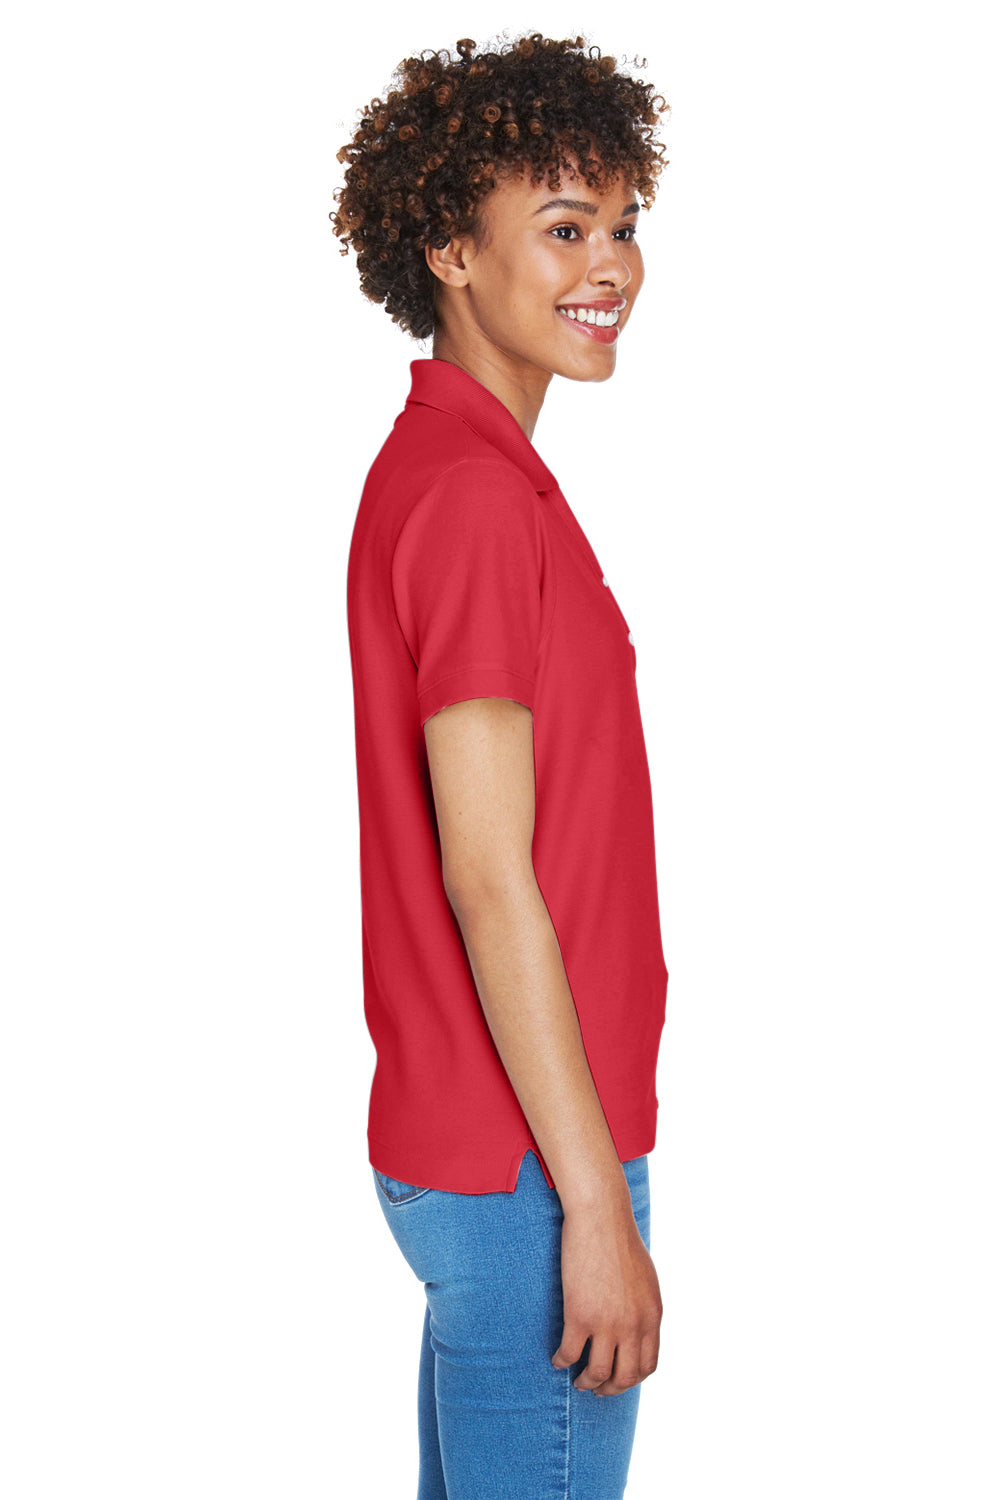 Devon & Jones D100W Womens Short Sleeve Polo Shirt Red Side